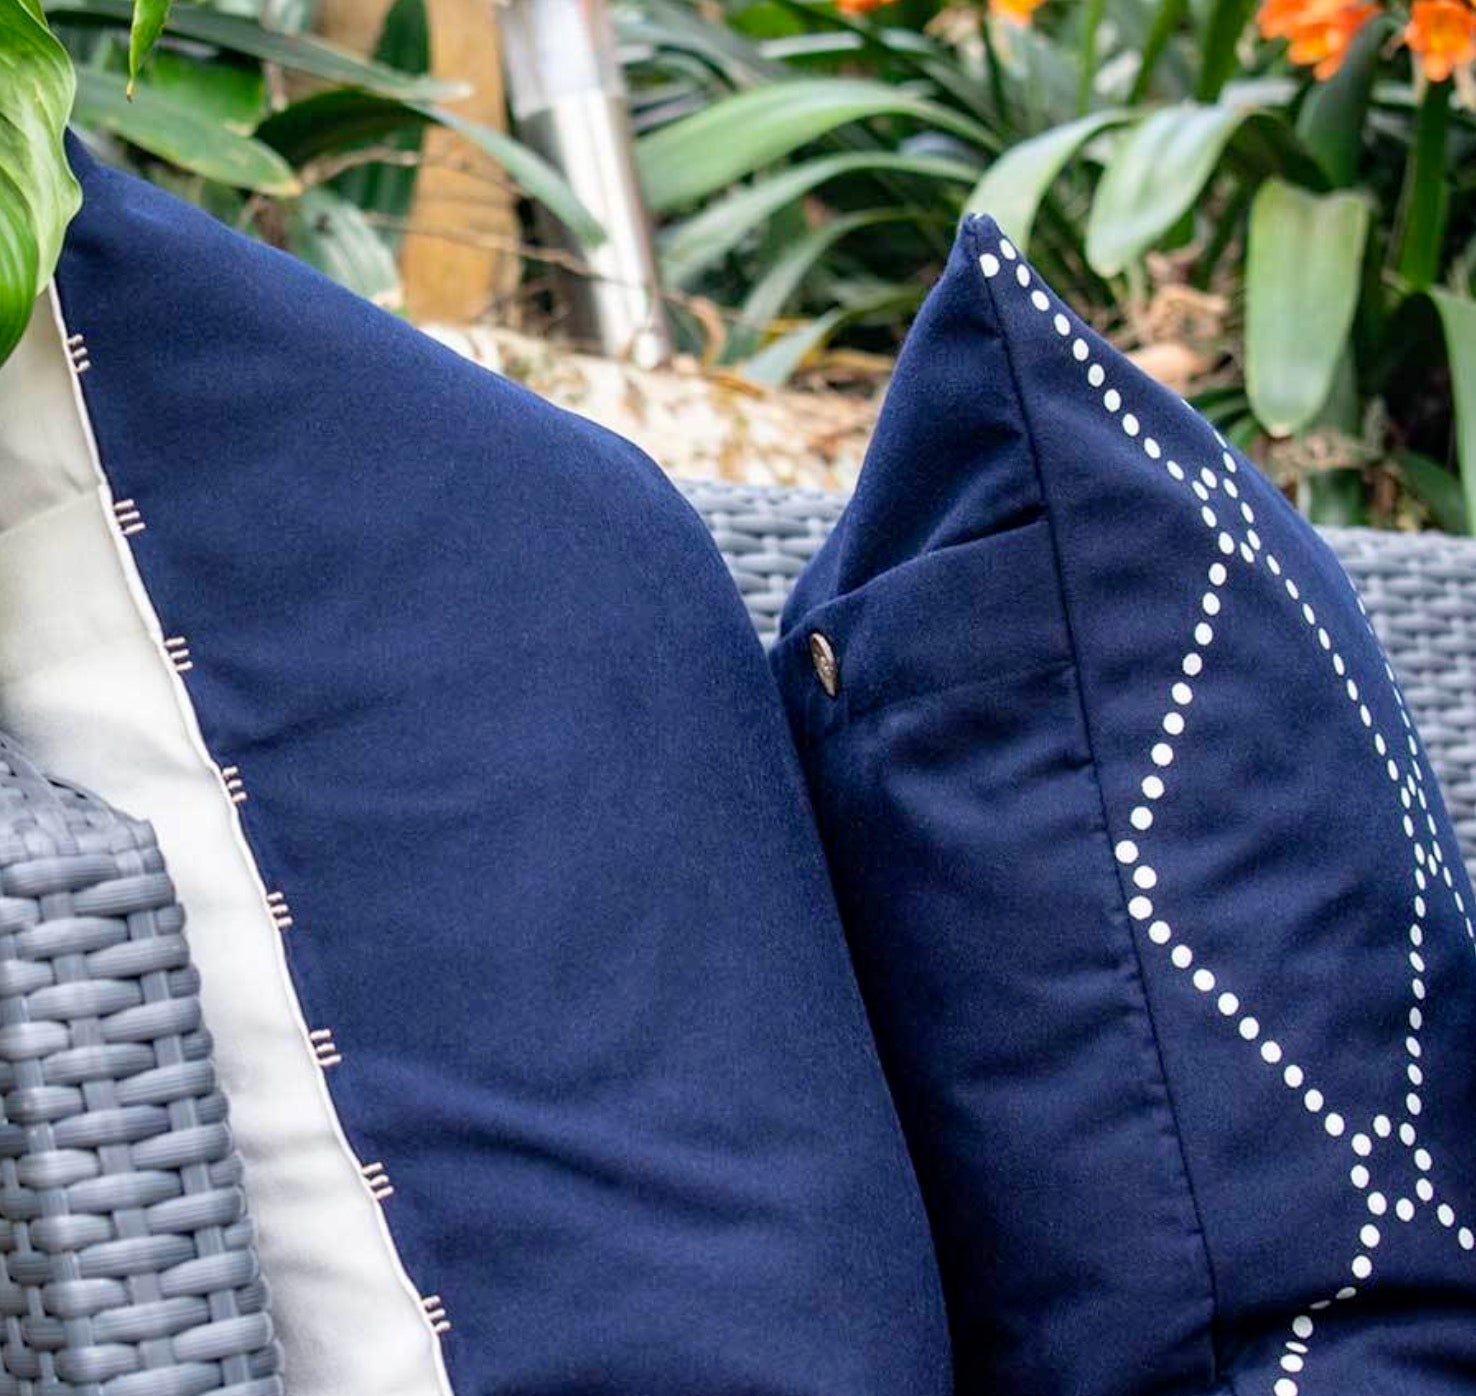 Bandhini Outdoor Navy & White Reverse Lounge Cushion